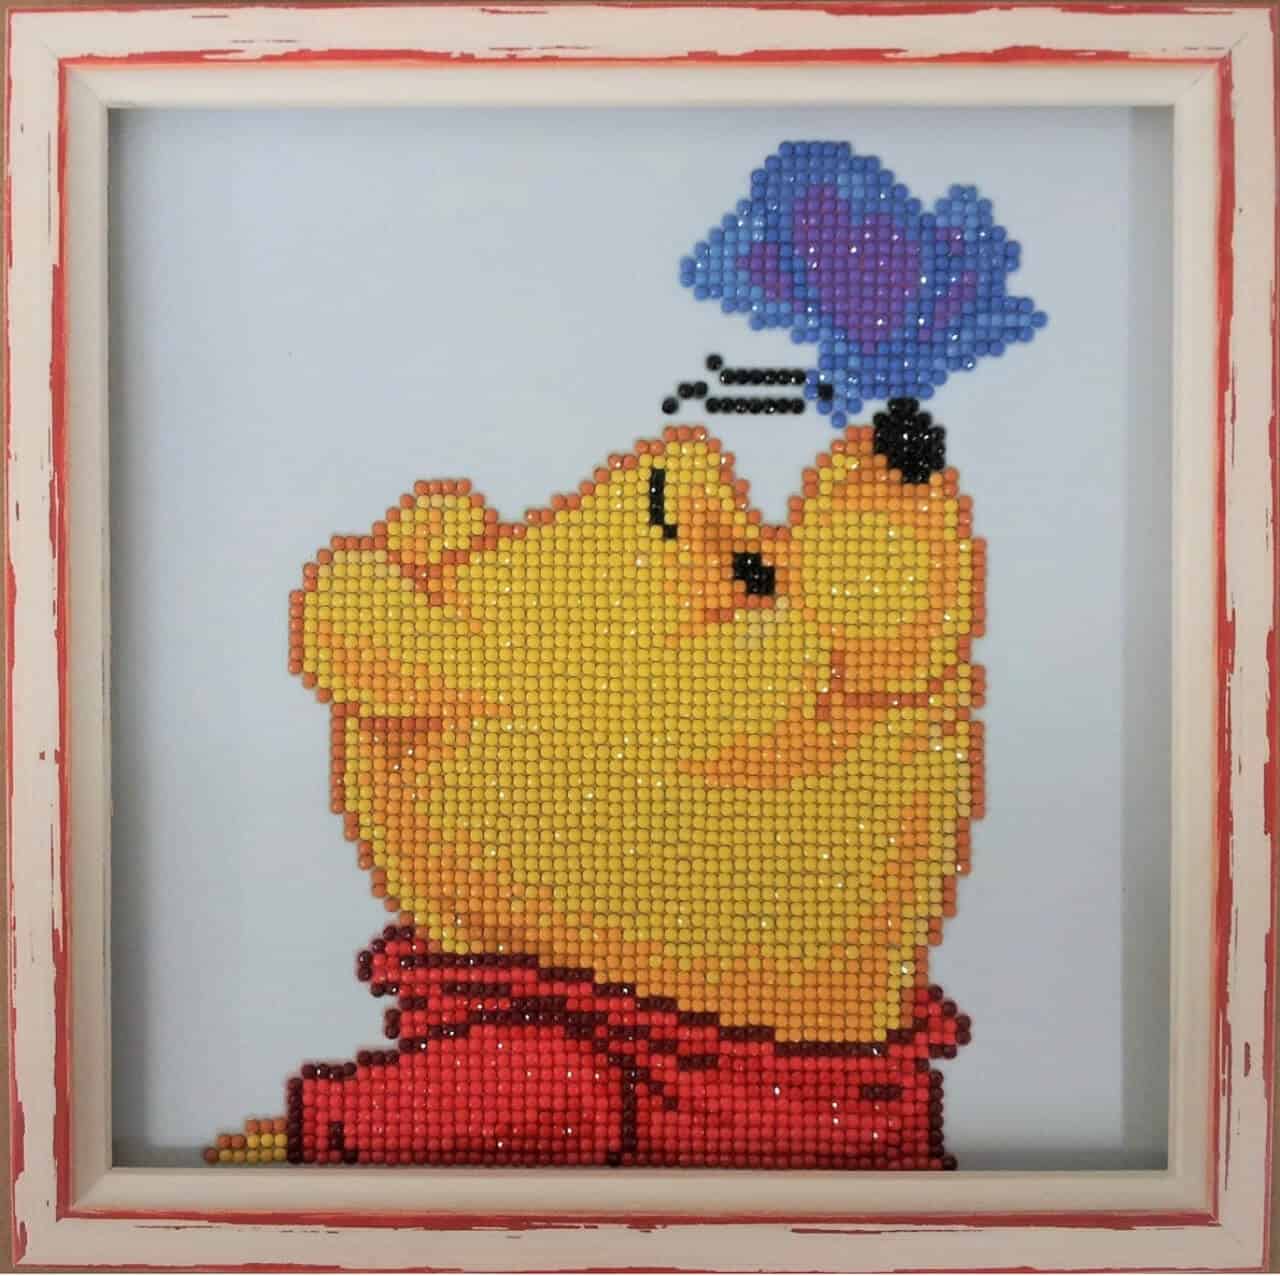 Winnie the pooh pixel design frame.